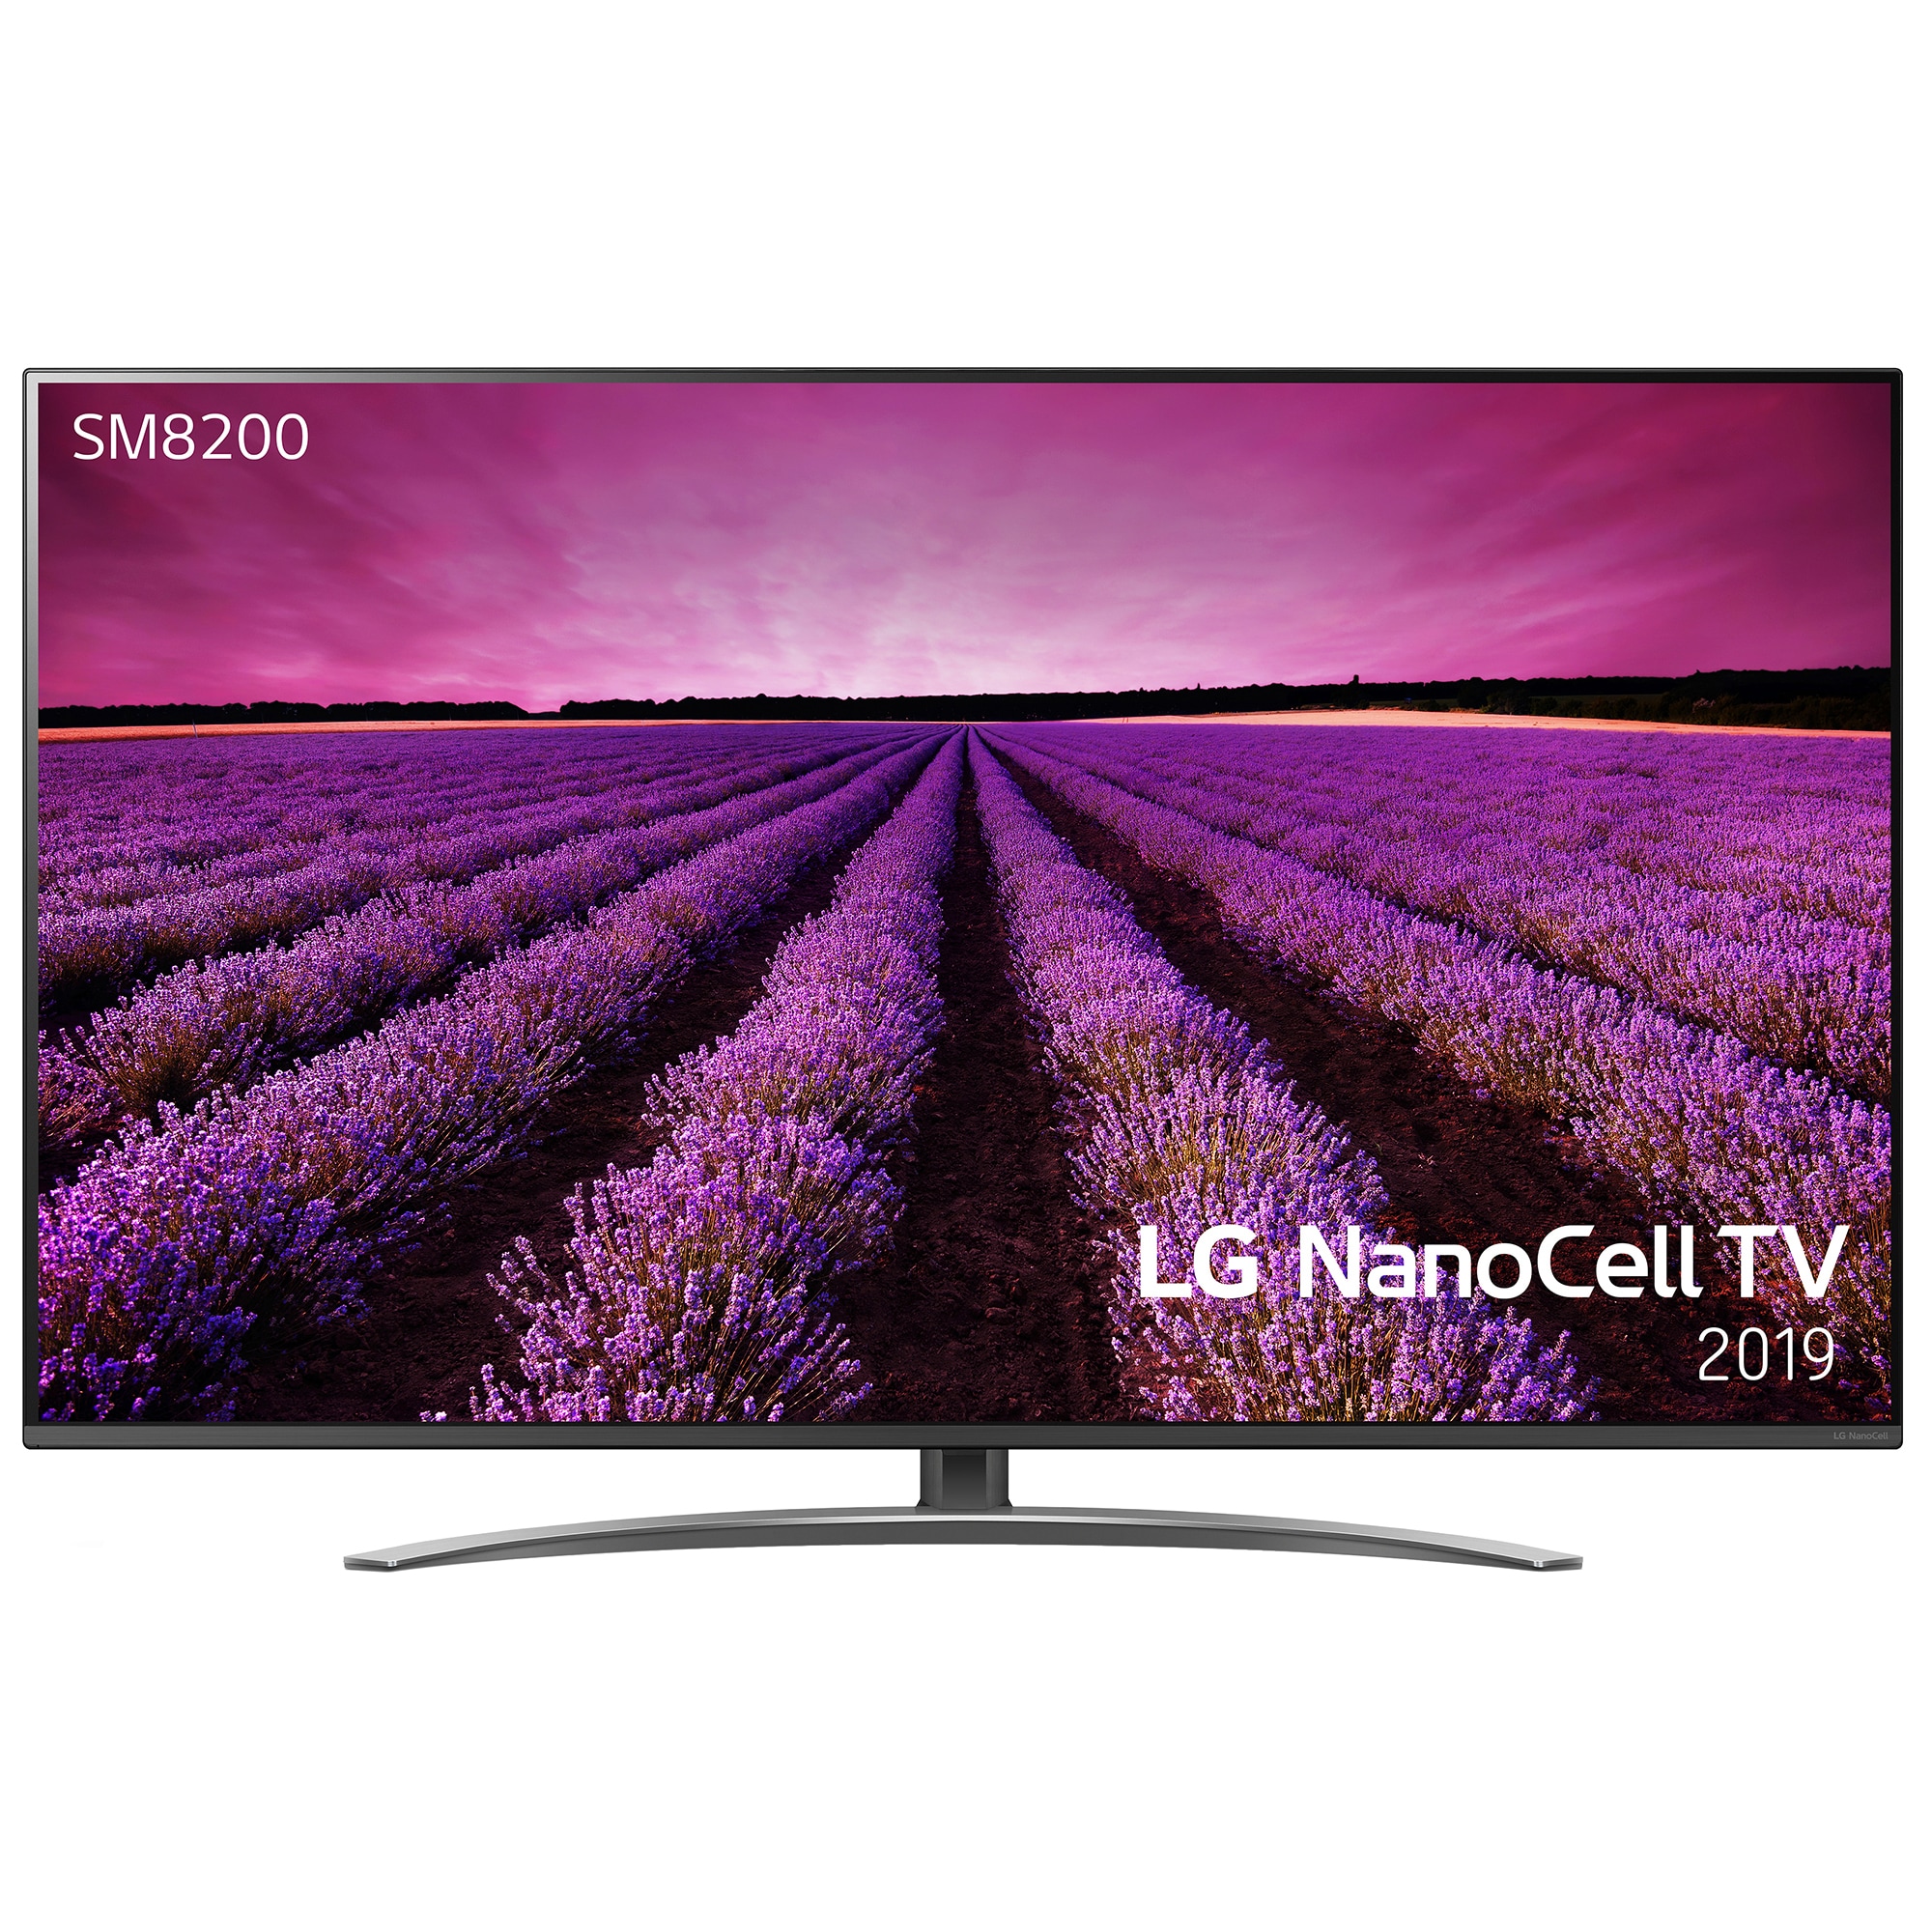 LG NanoCell TV 55" - 55SM8200 - TV - Elgiganten